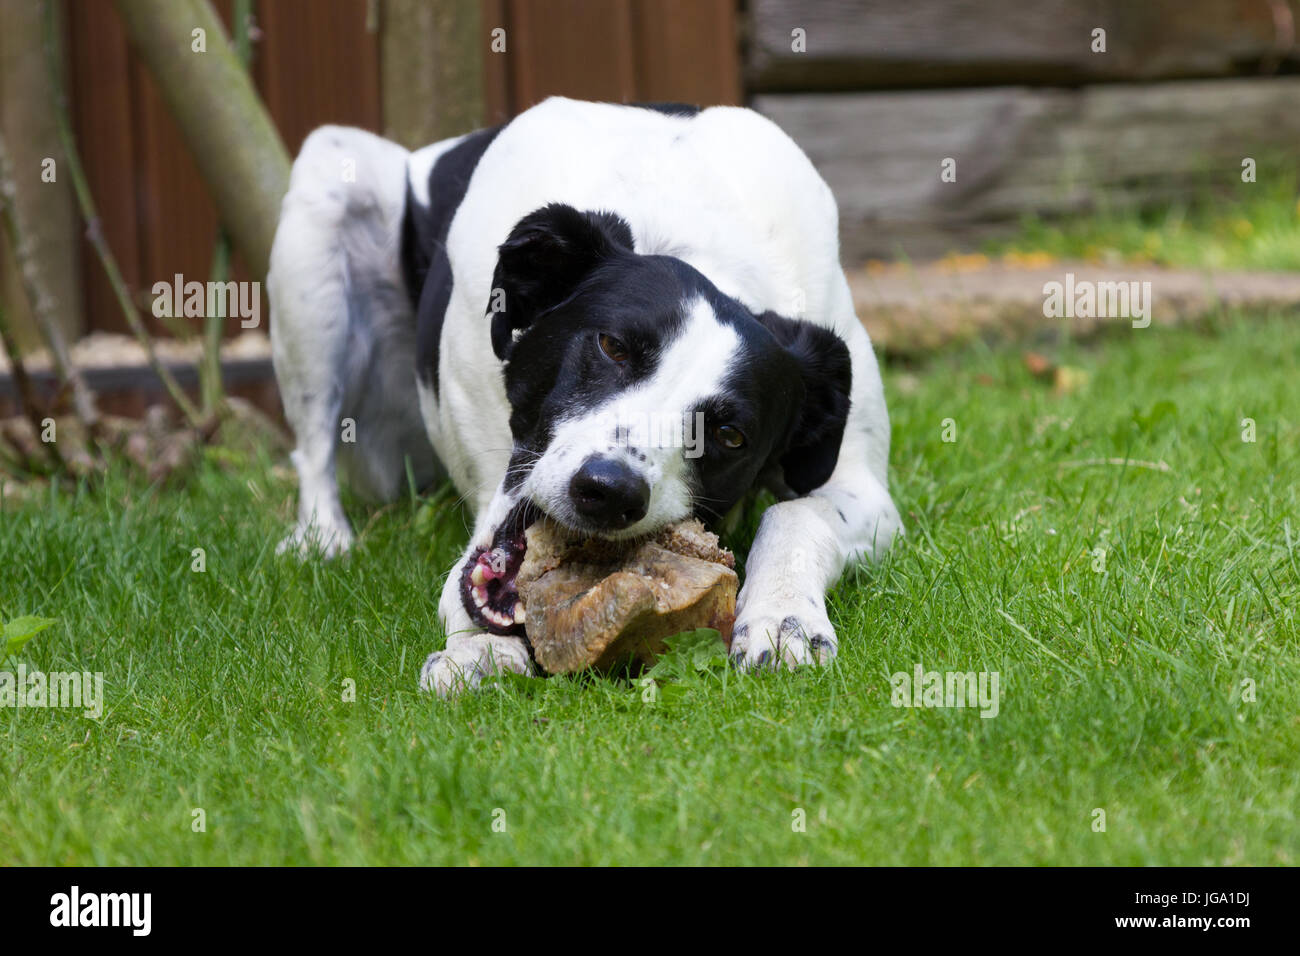 Lurcher dog with a bone Stock Photo